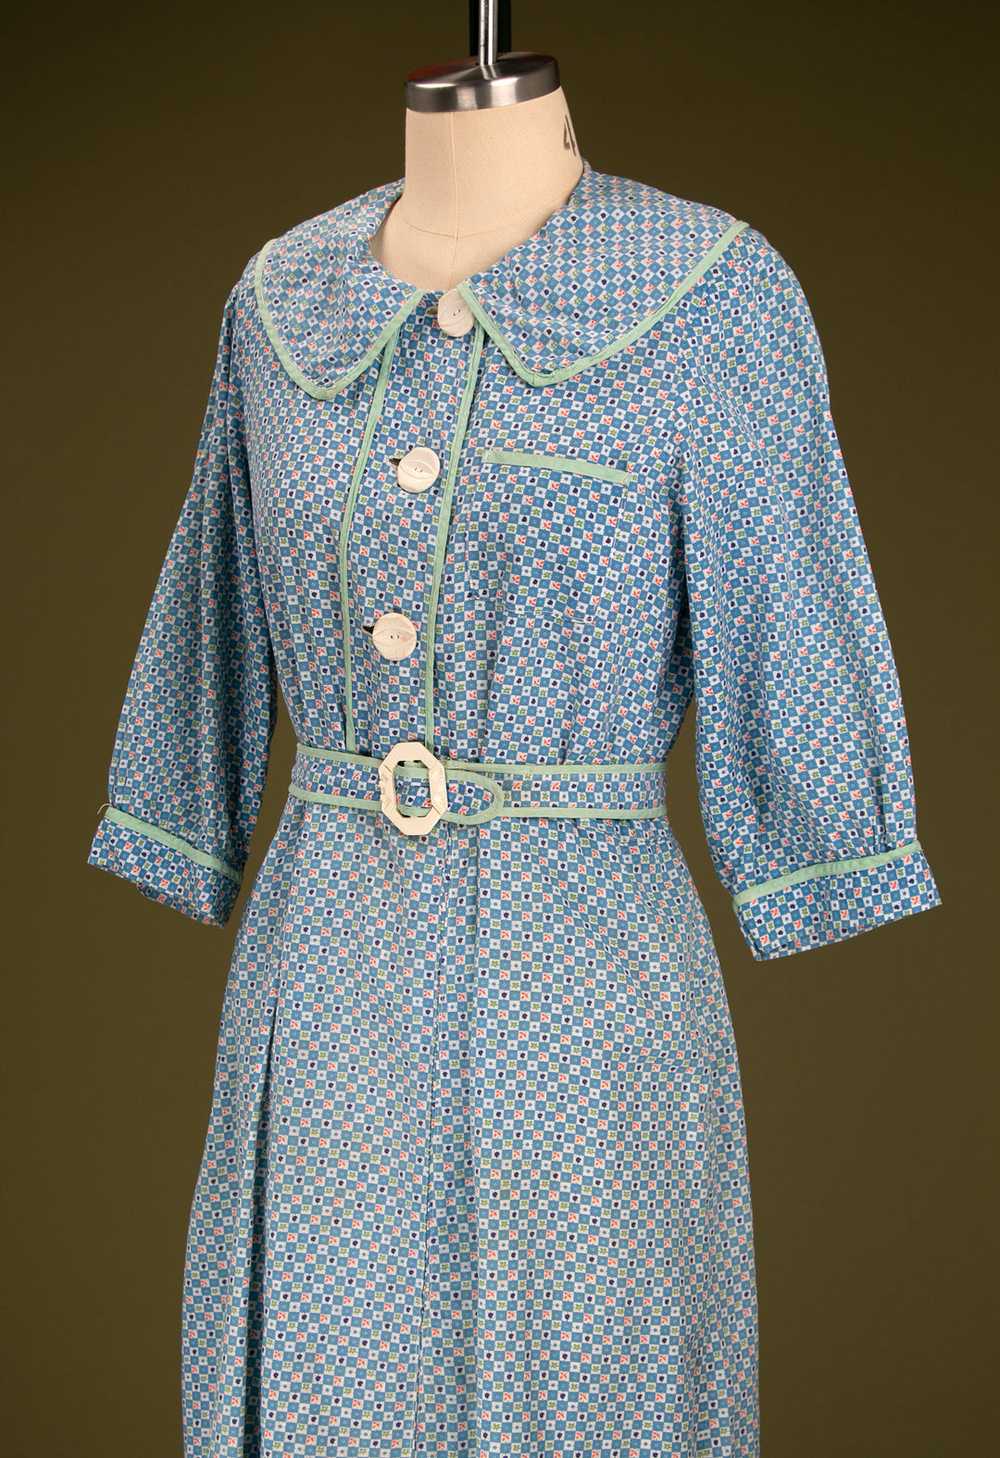 Vintage 1930's Depression Era Blue Farm Dress - image 6